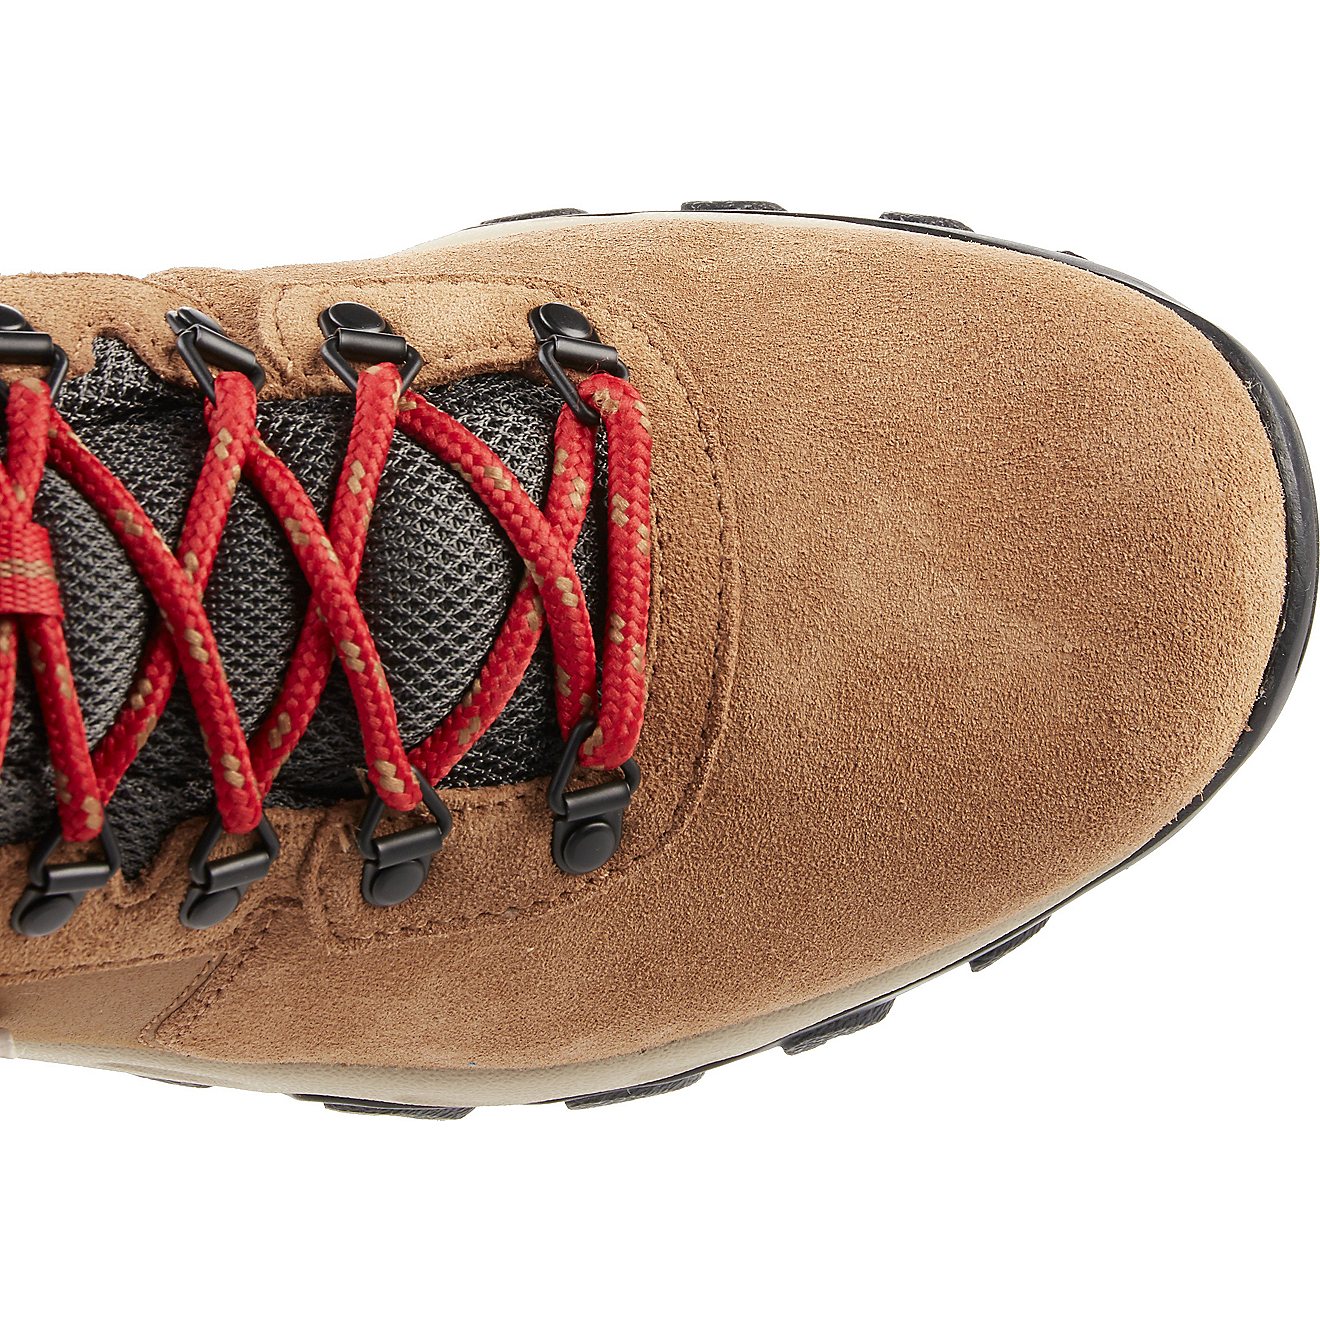 Columbia Sportswear Men's Newton Ridge Plus II Hiking Boots                                                                      - view number 3